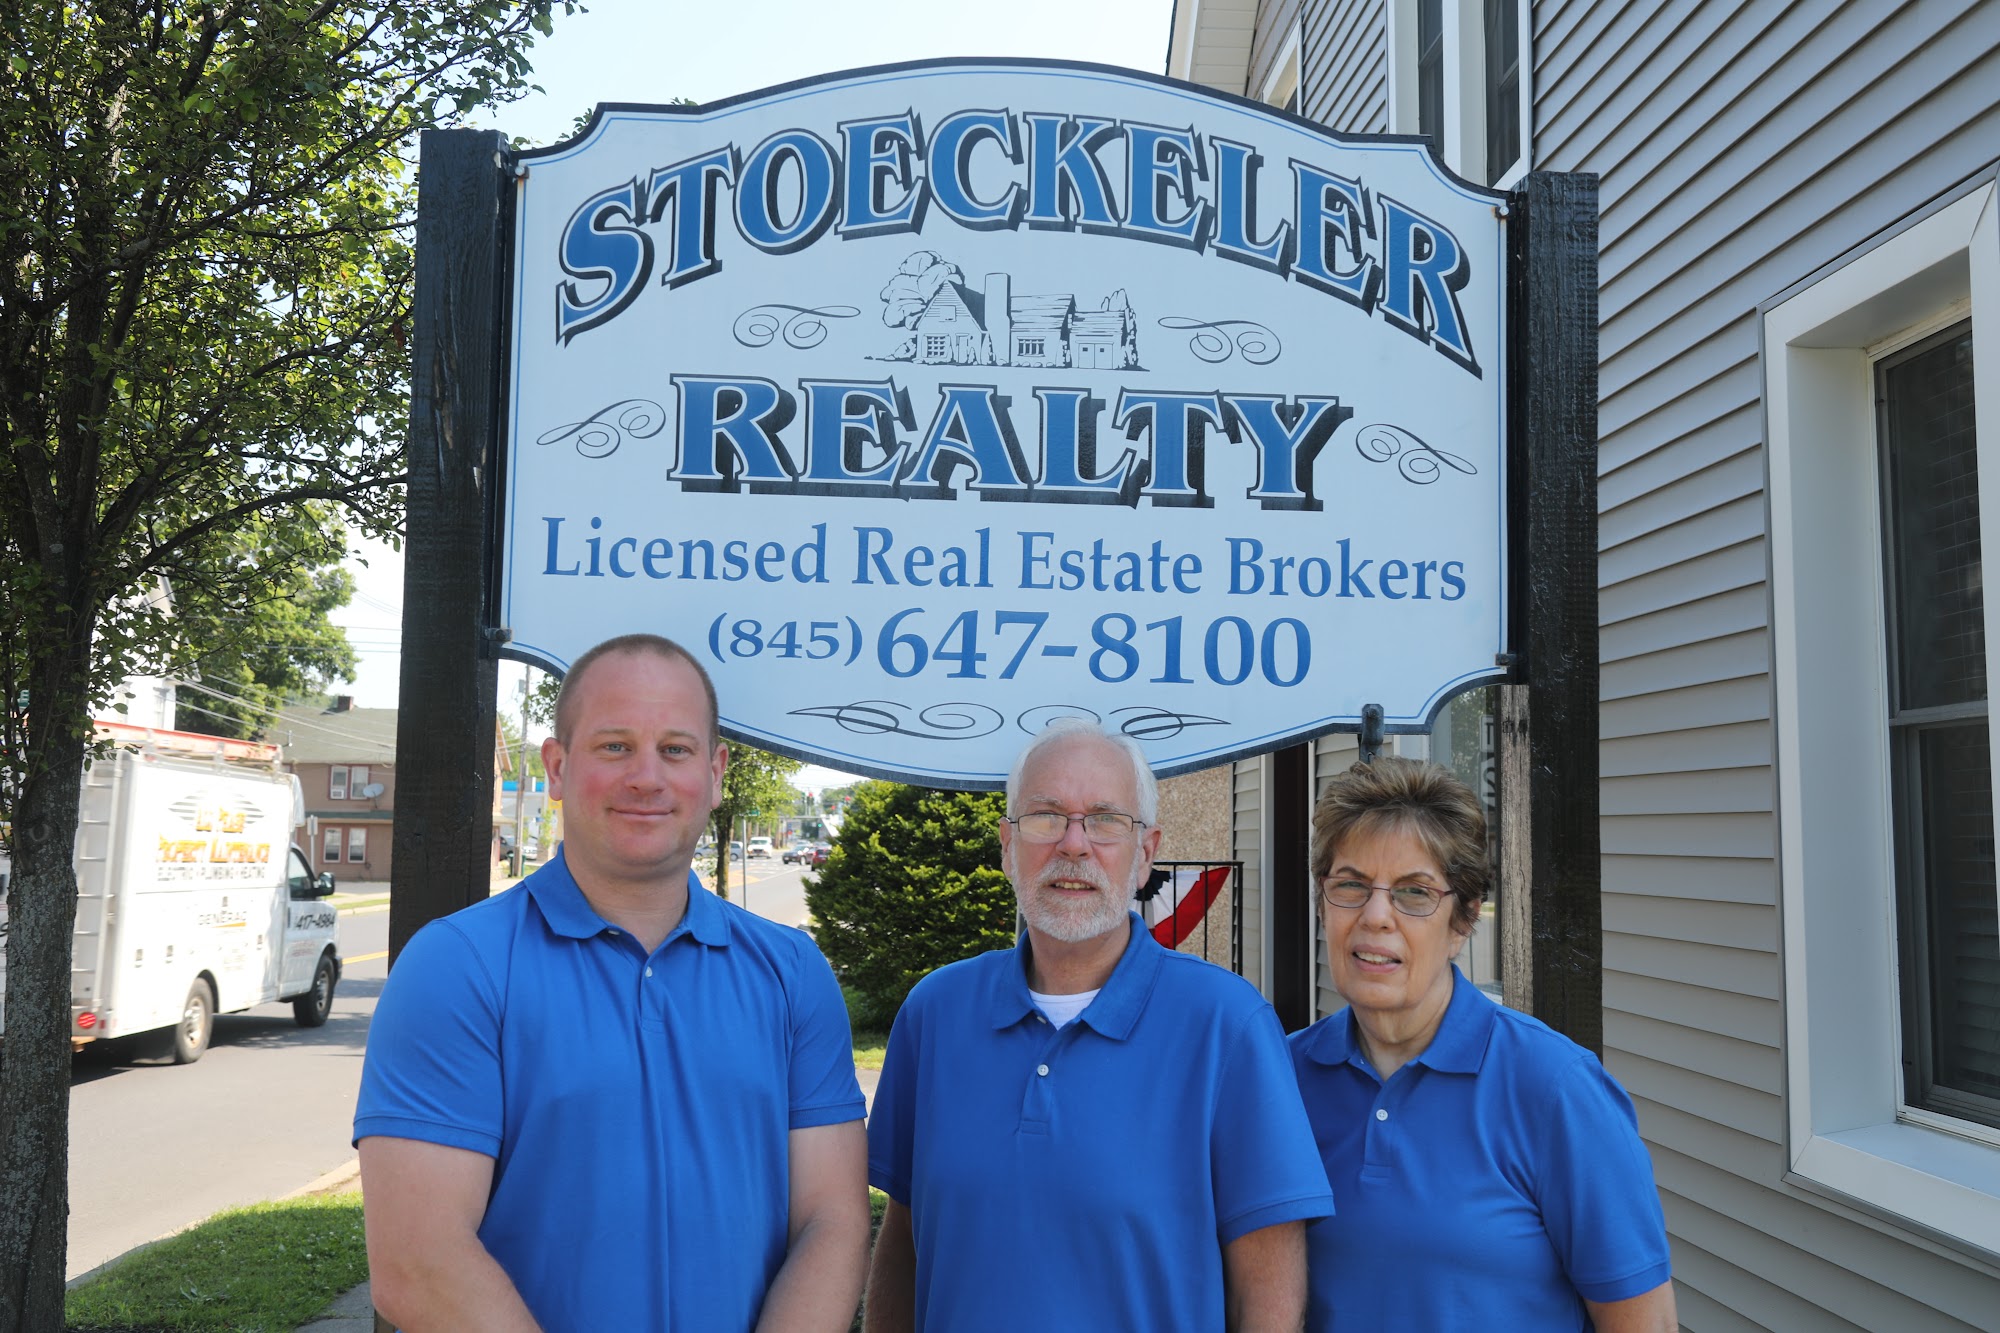 Stoeckeler Real Estate Services LLC 126 S Main St, Ellenville New York 12428